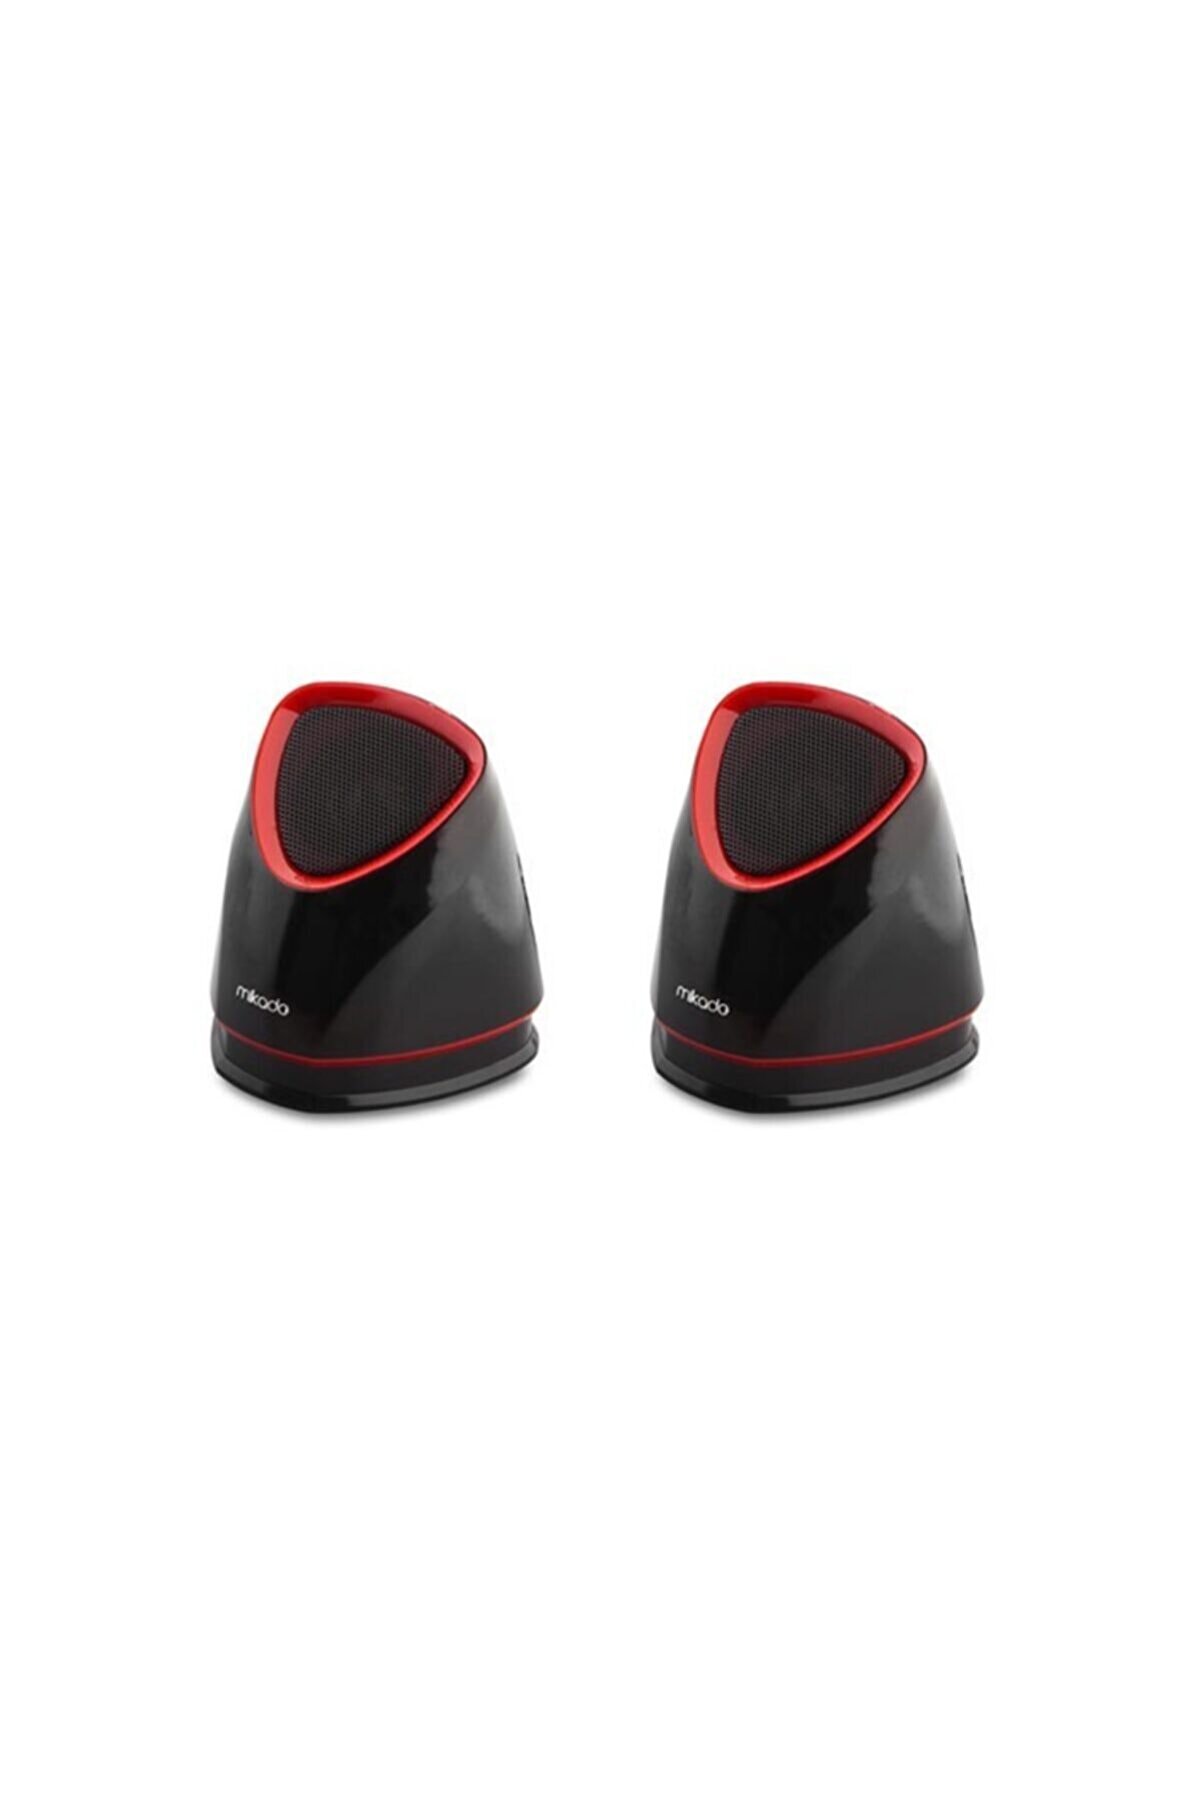 Mikado Md-158 2.0 Siyah/kırmızı Usb Speaker